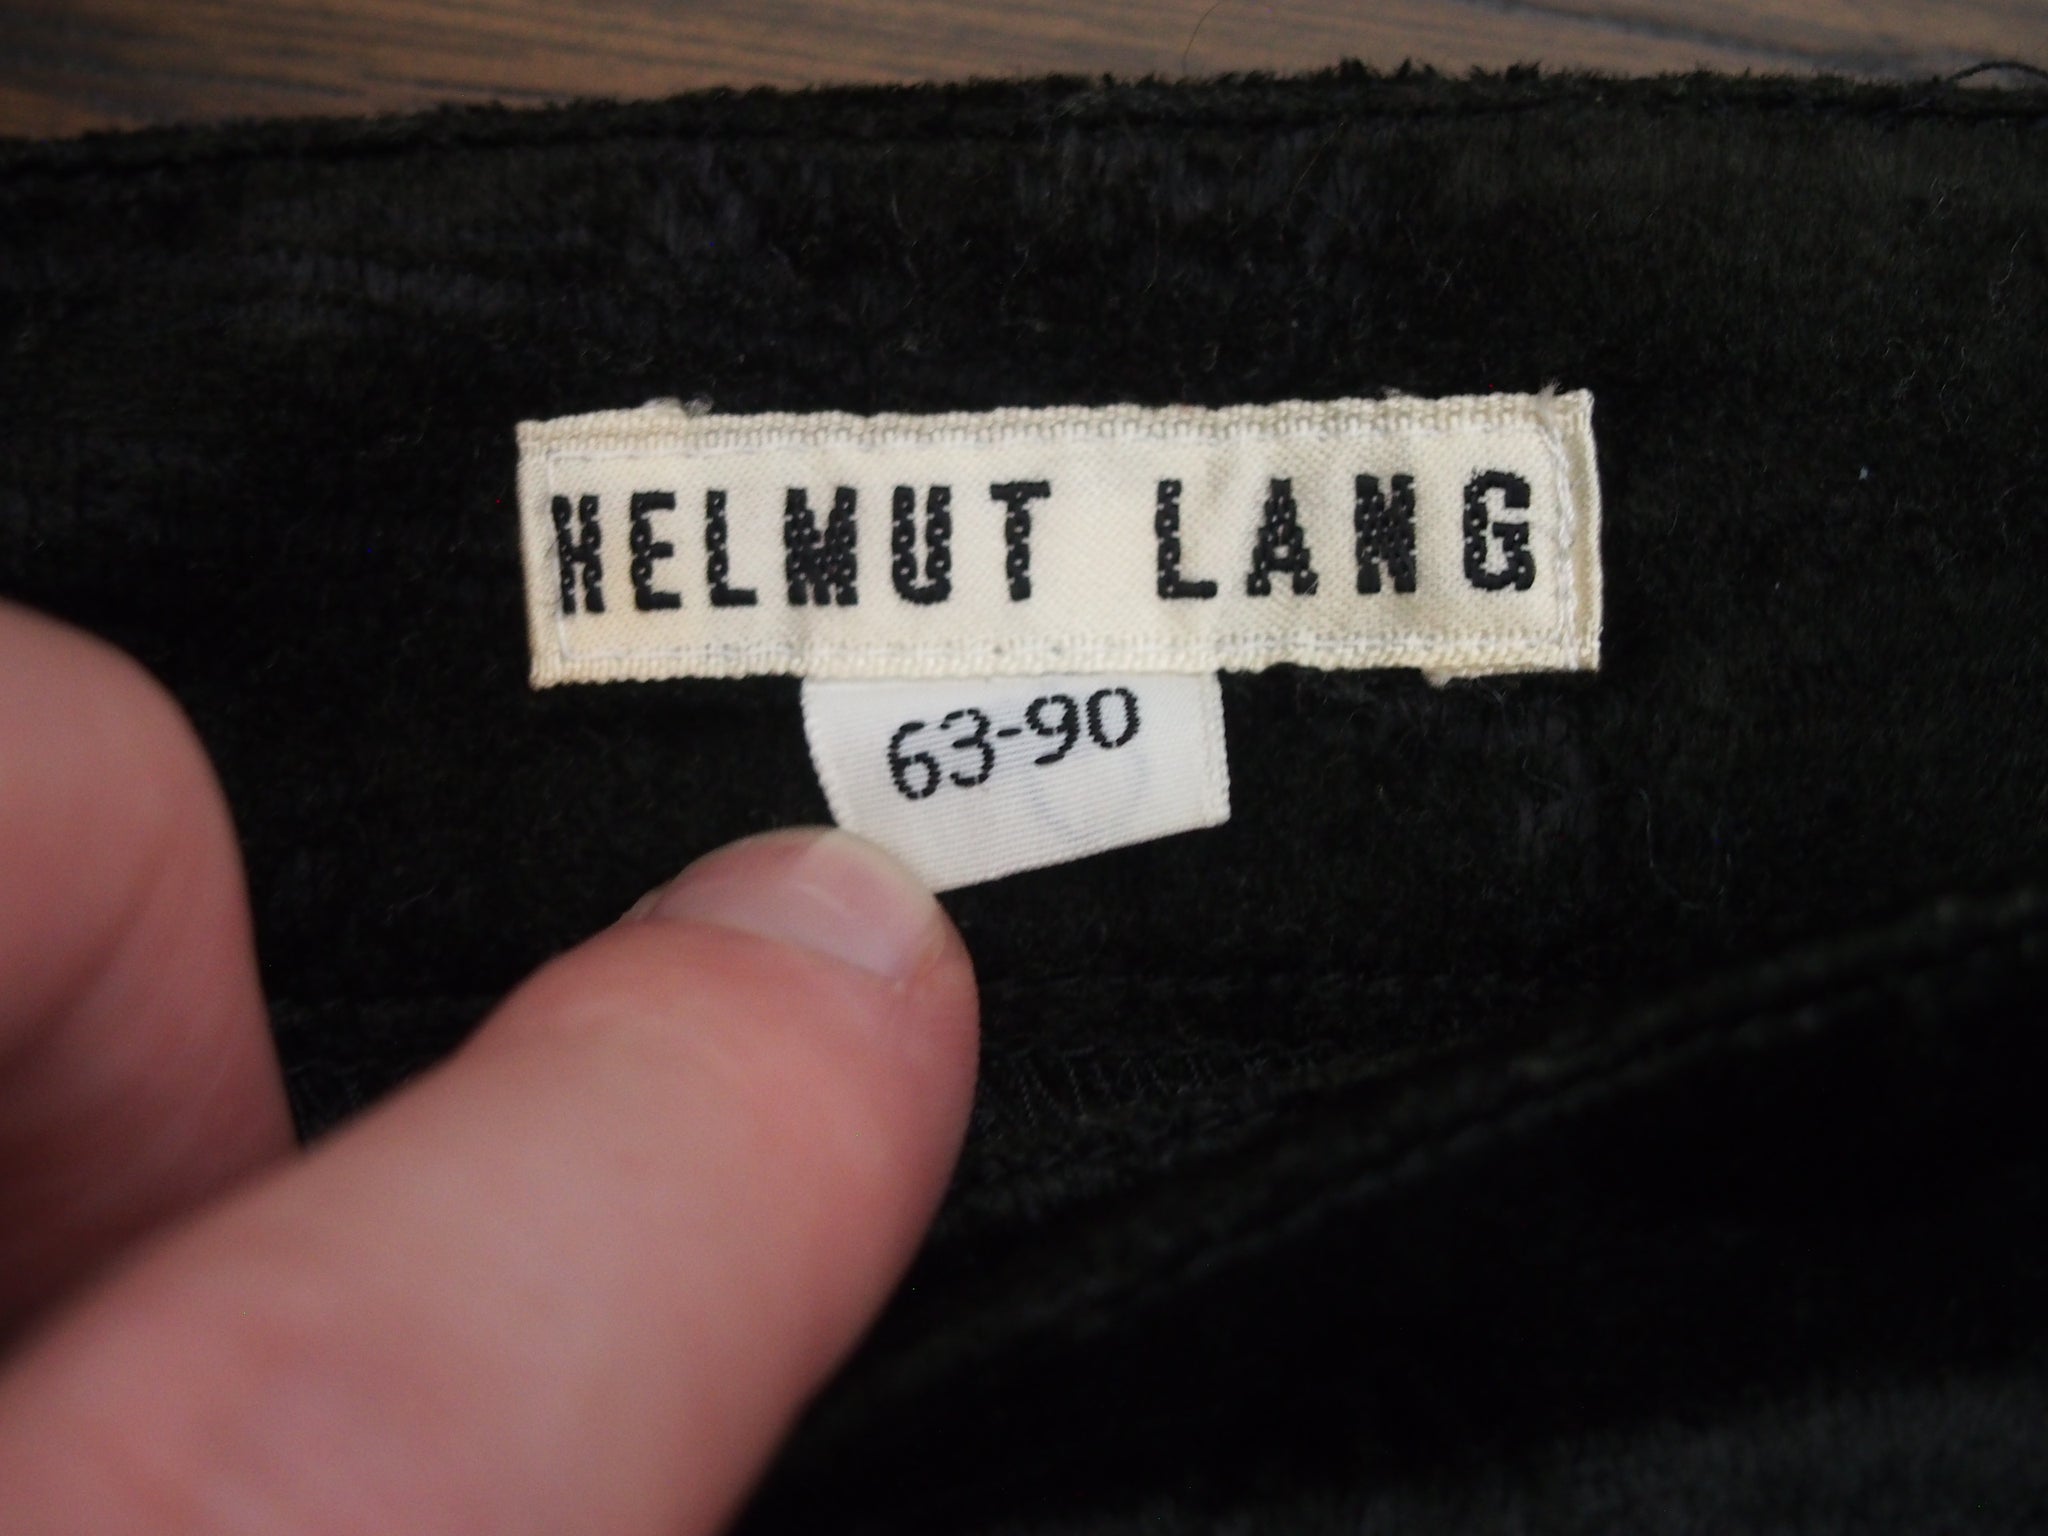 Helmut Lang 63